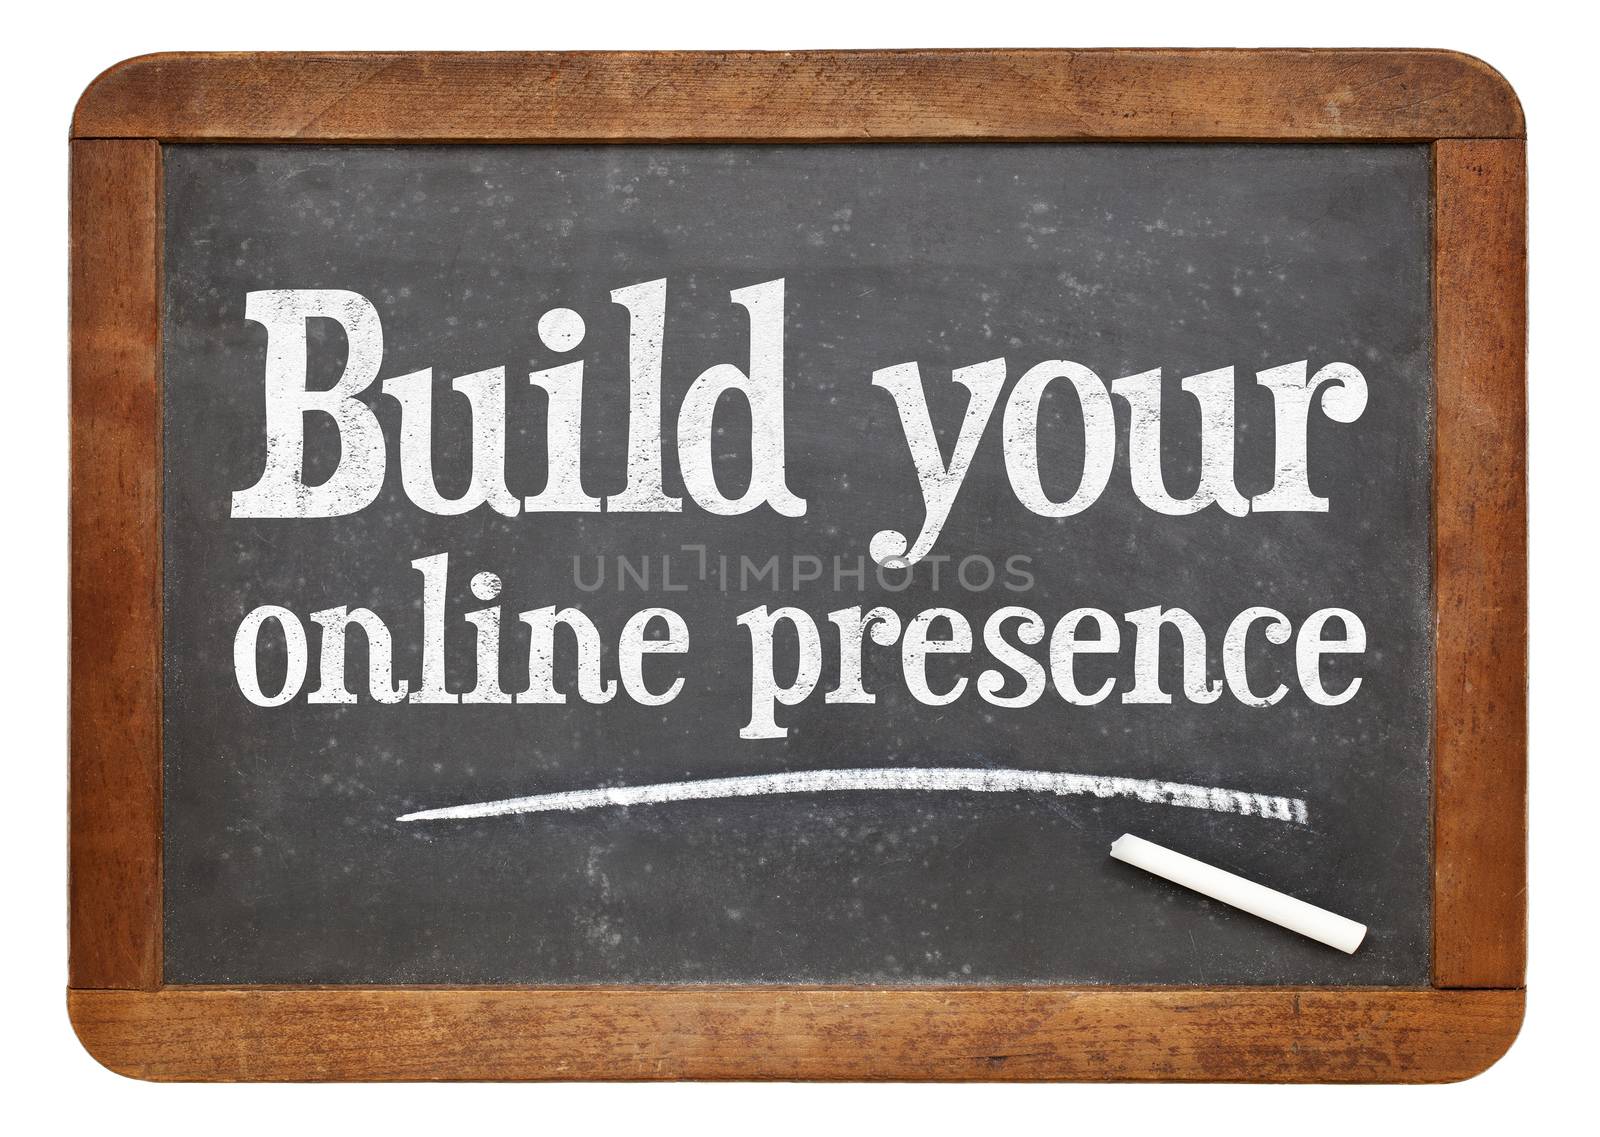 Build your online presence by PixelsAway